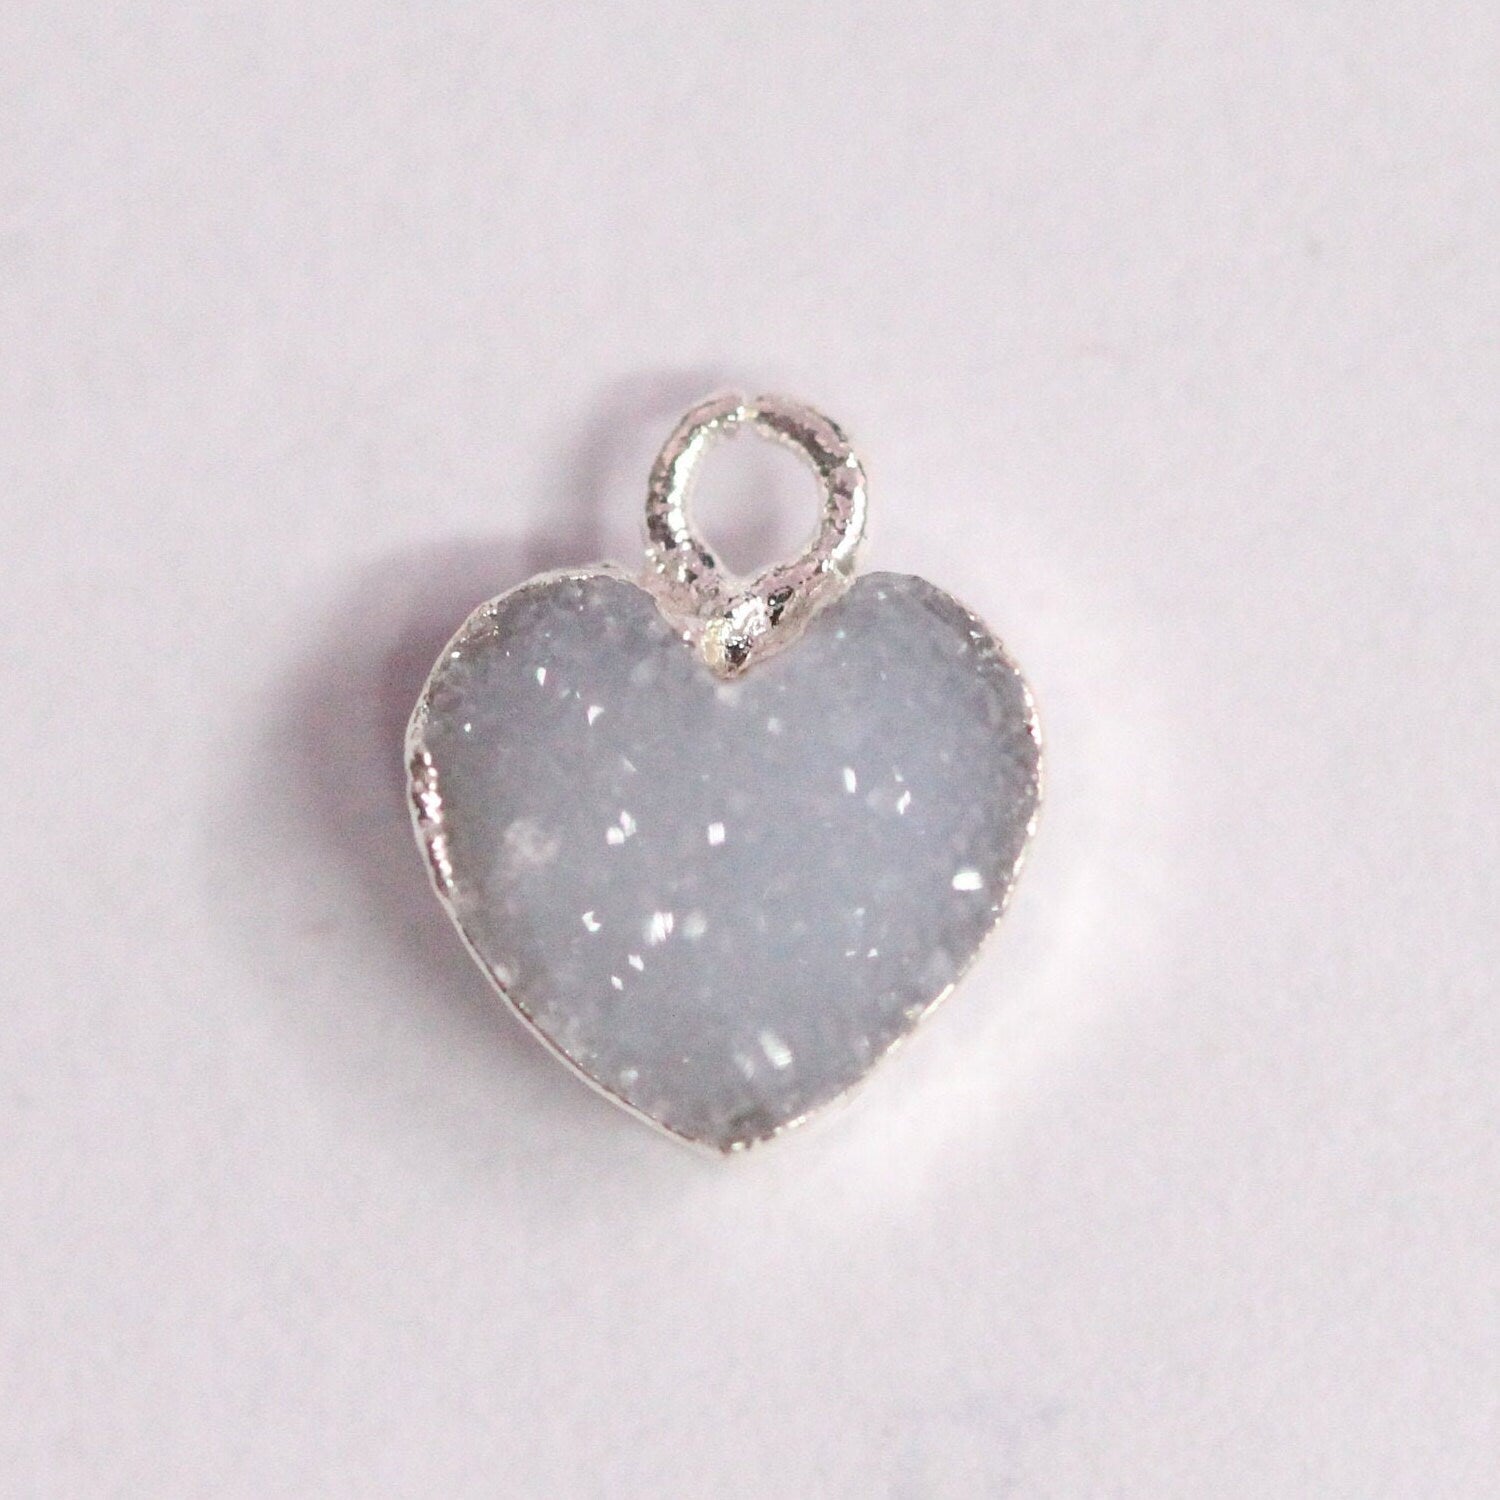 Heart Druzy Natural Gemstone, jewelry making supply, Single Bail, Dainty Minimalist - Meena Design